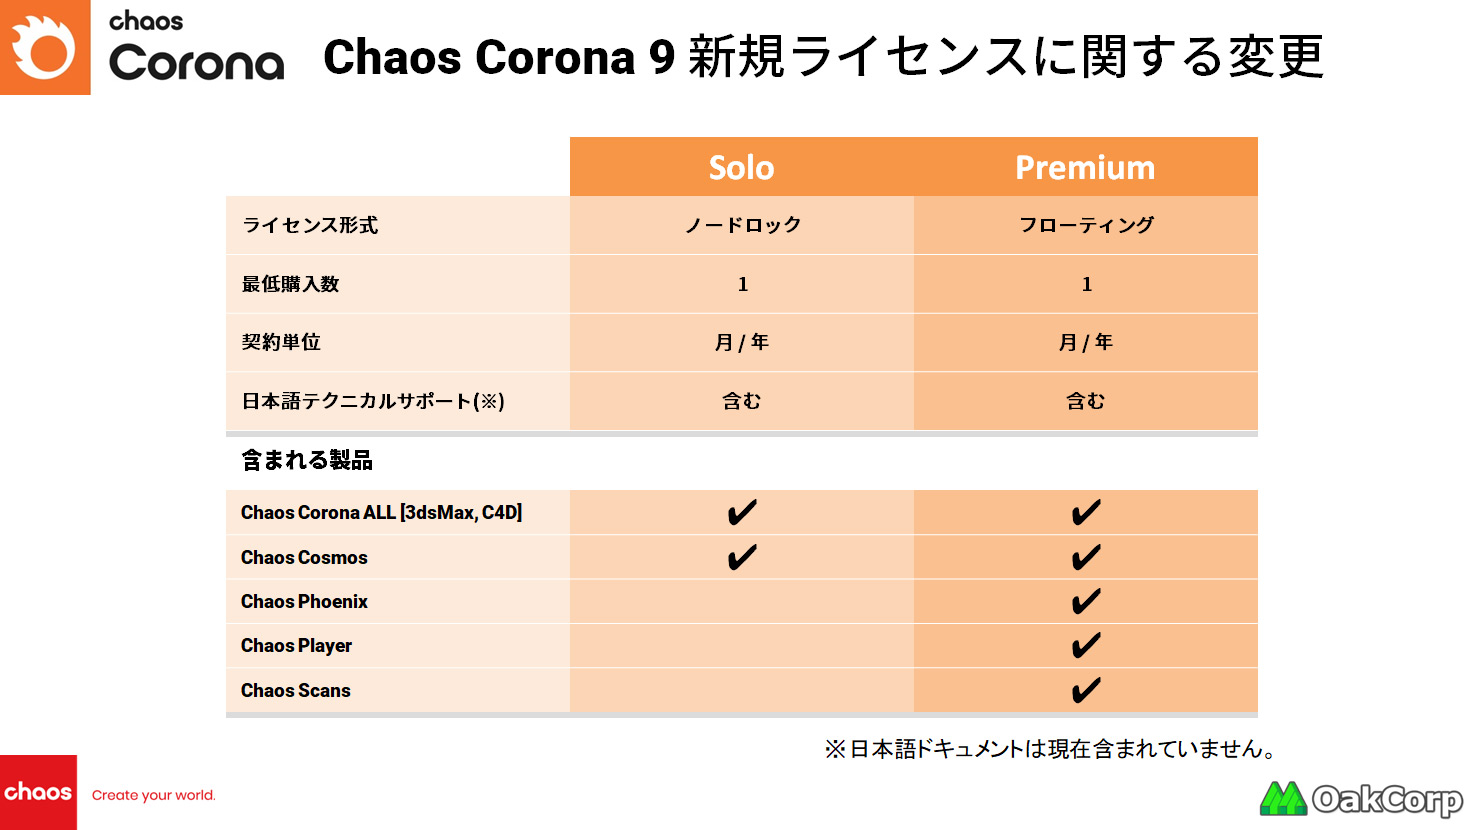 Chaos Corona 9 新ライセンス形態